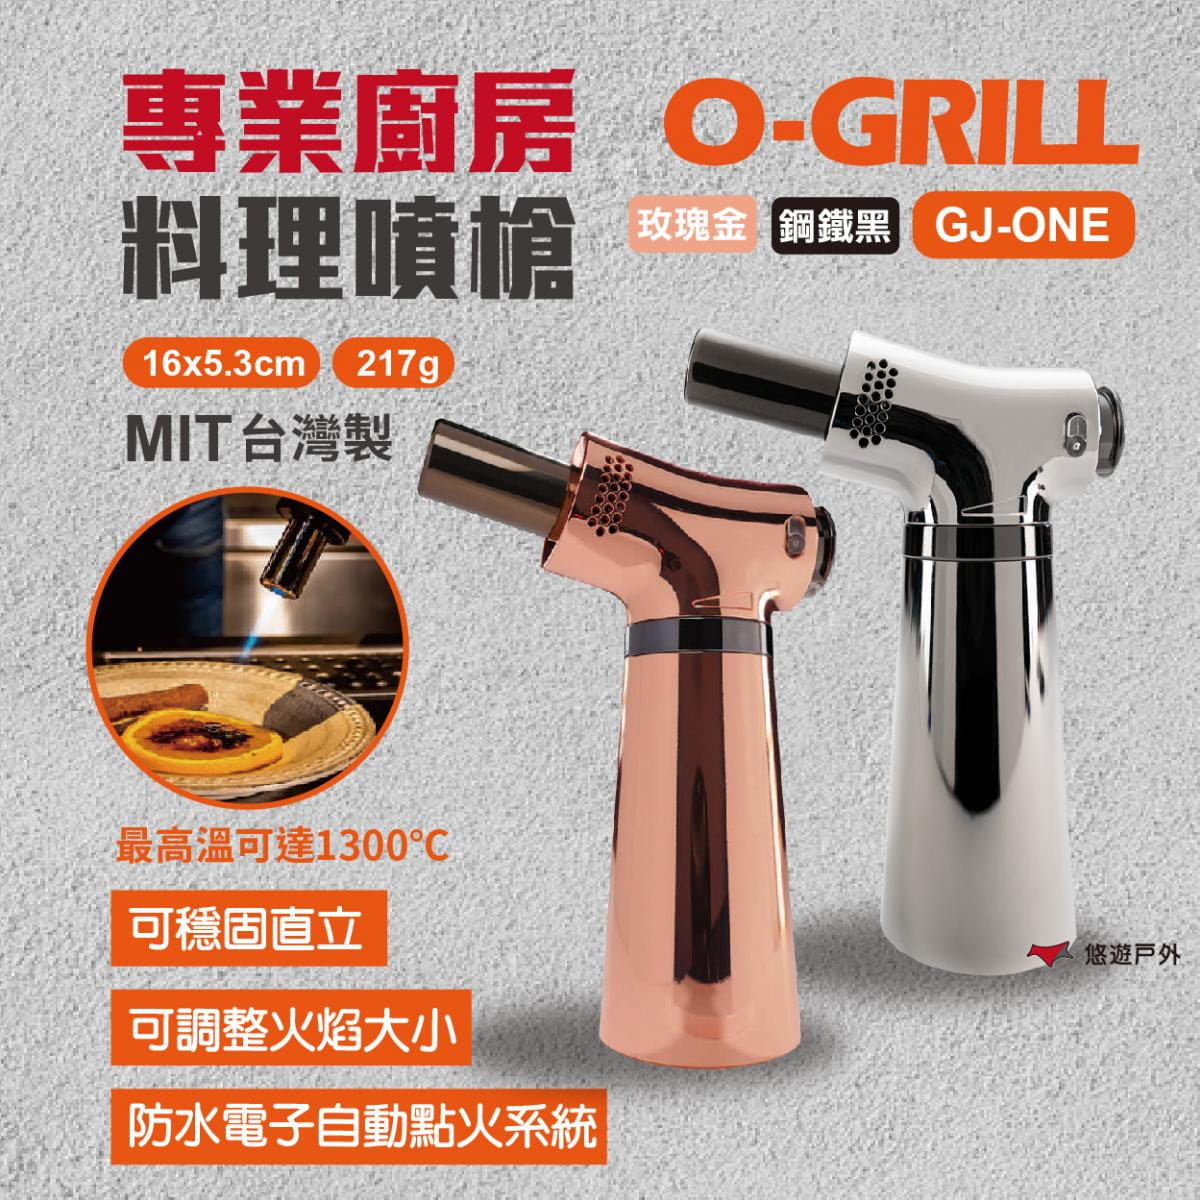 【O-Grill】專業廚房料理噴槍 GJ-ONE 悠遊戶外 1